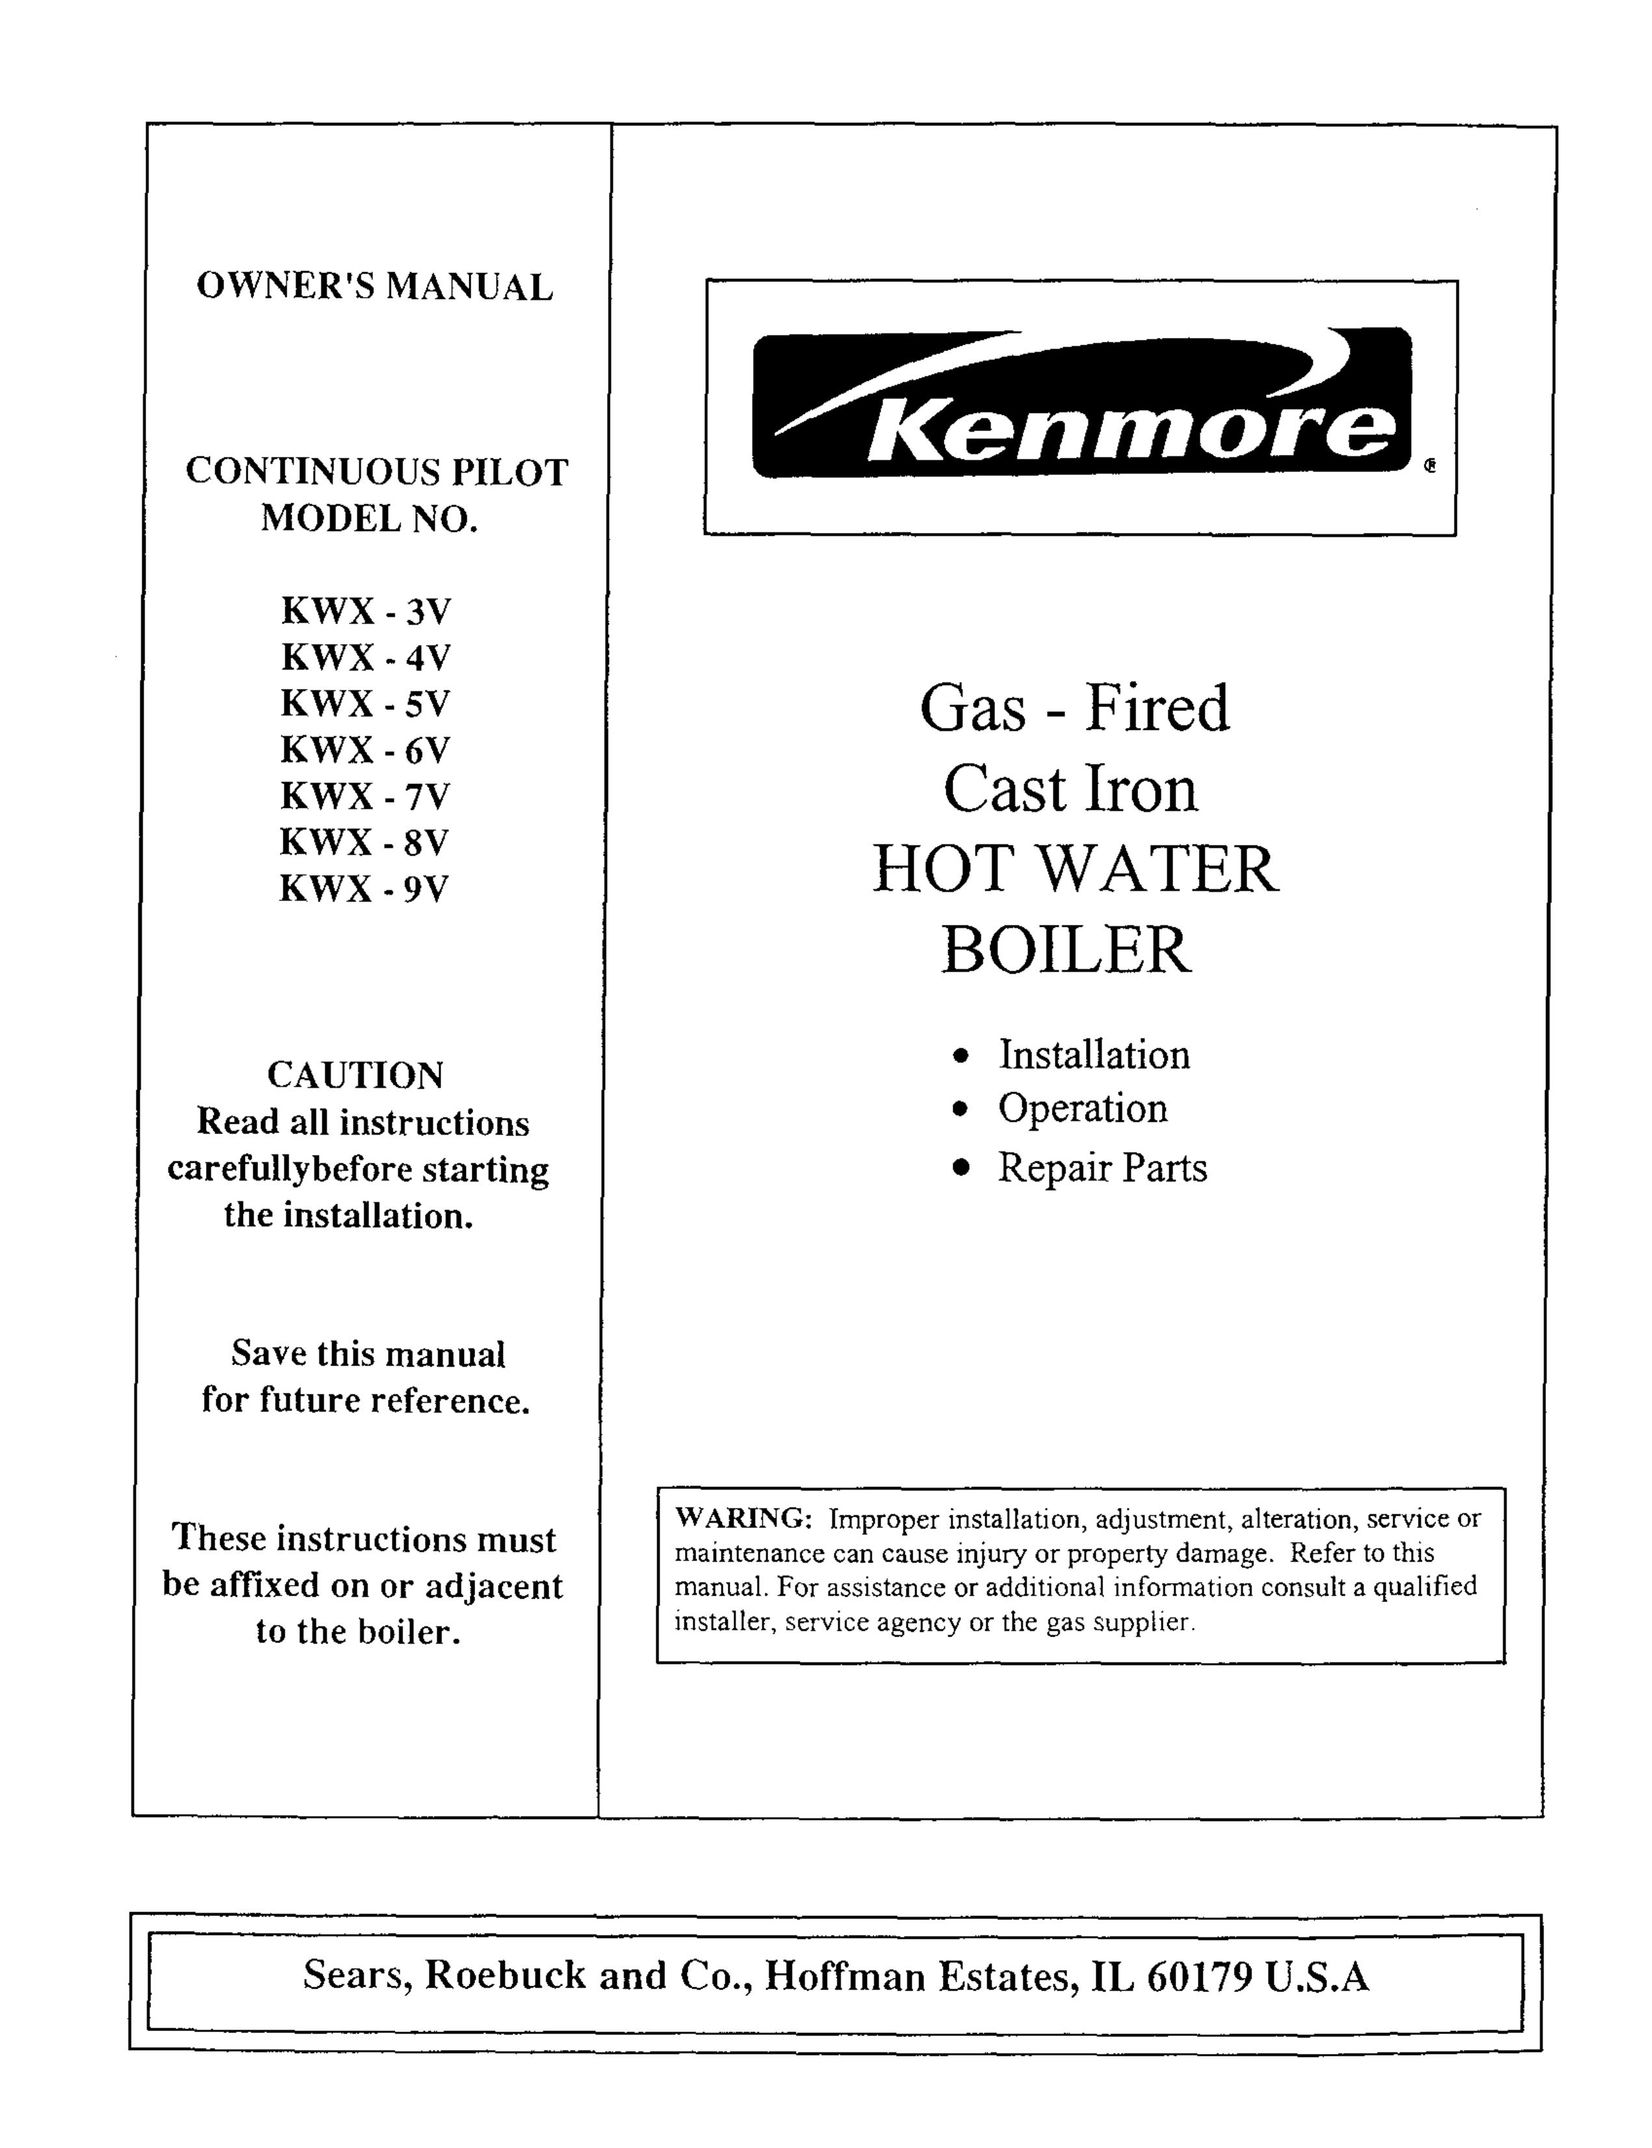 Kenmore KWX - 7V Boiler User Manual